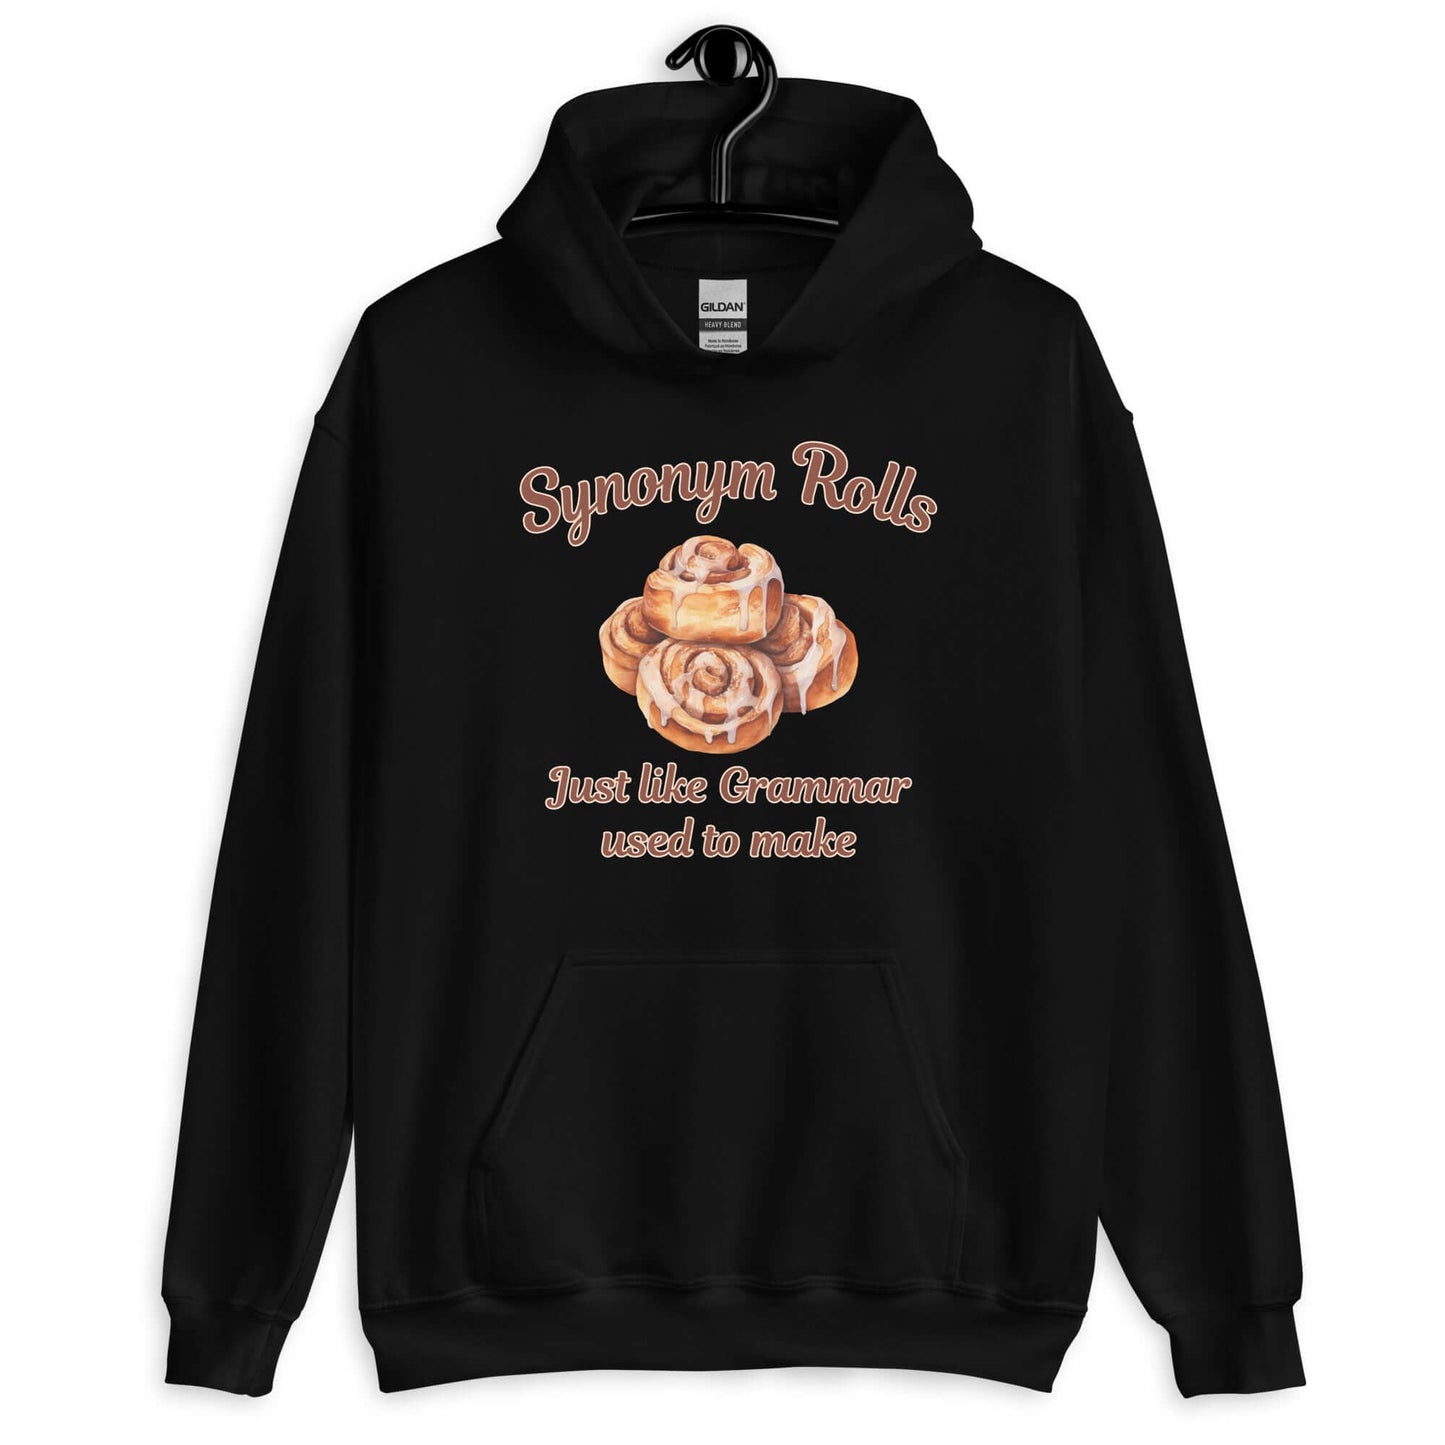 Cinnamon rolls funny pun hoodie. Synonym rolls hooded sweatshirt